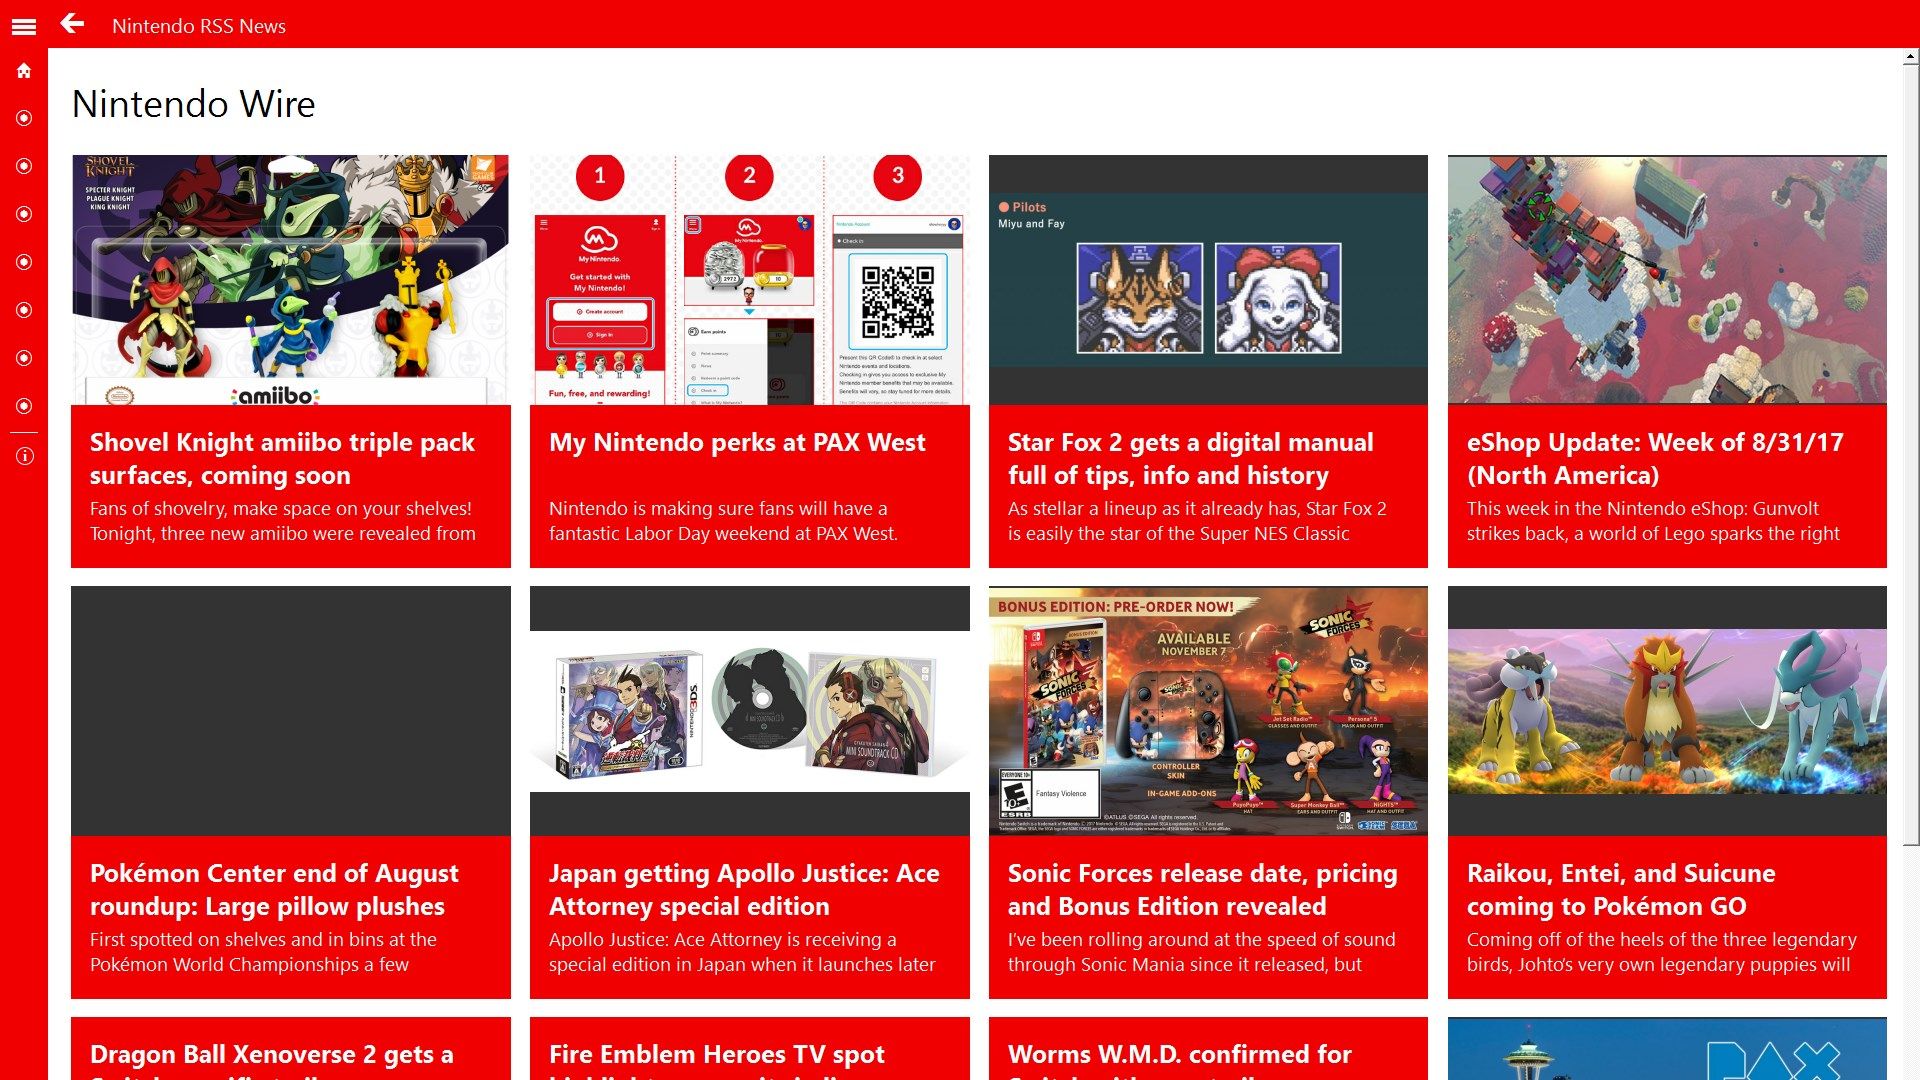 Nintendo RSS News